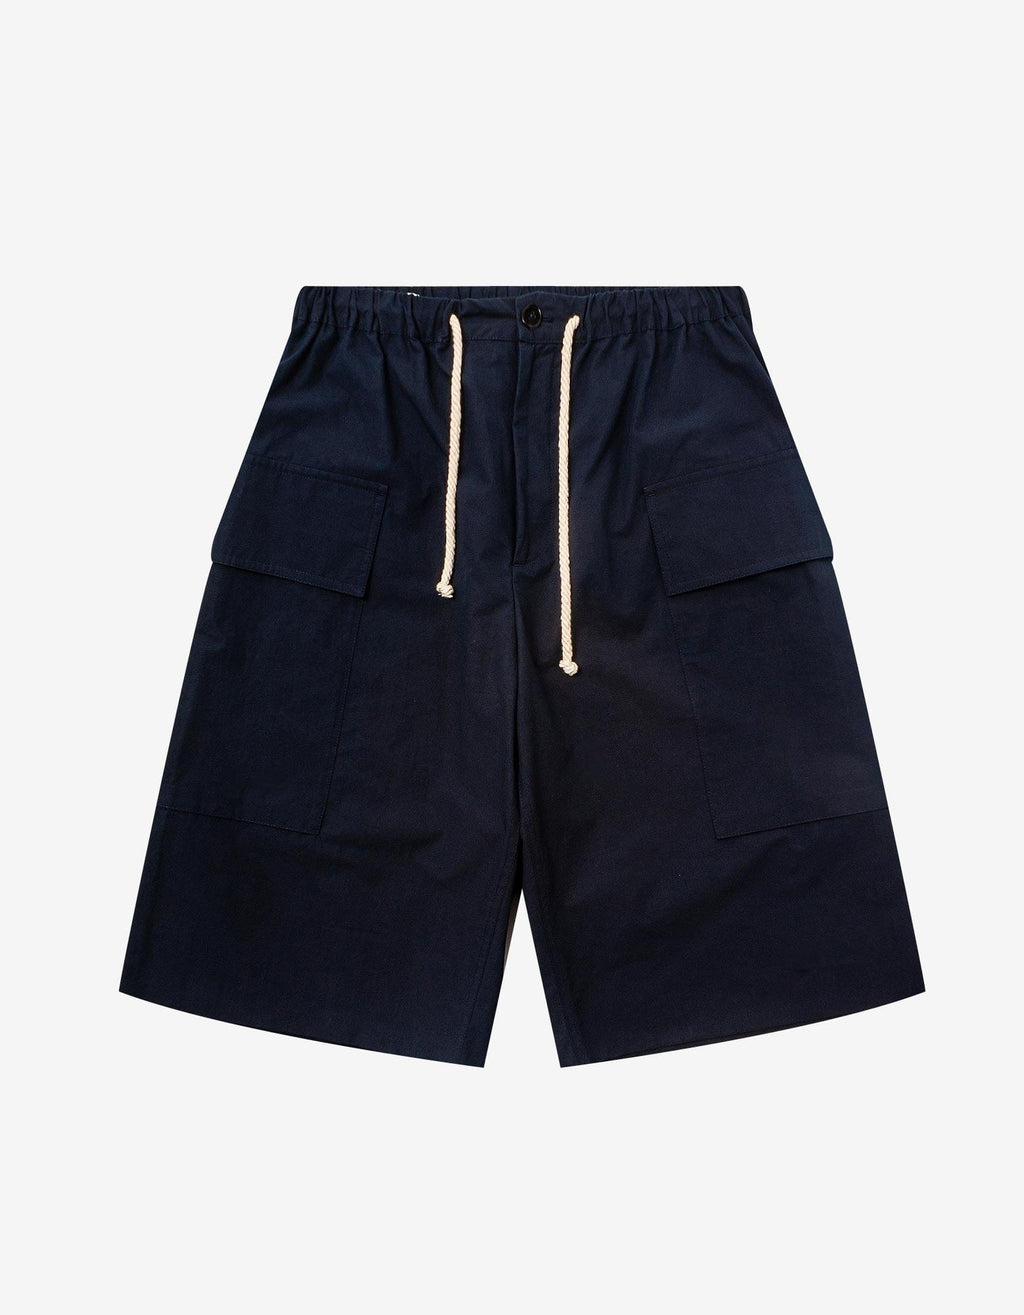 Jil Sander Jil Sander Navy Blue Cargo Shorts